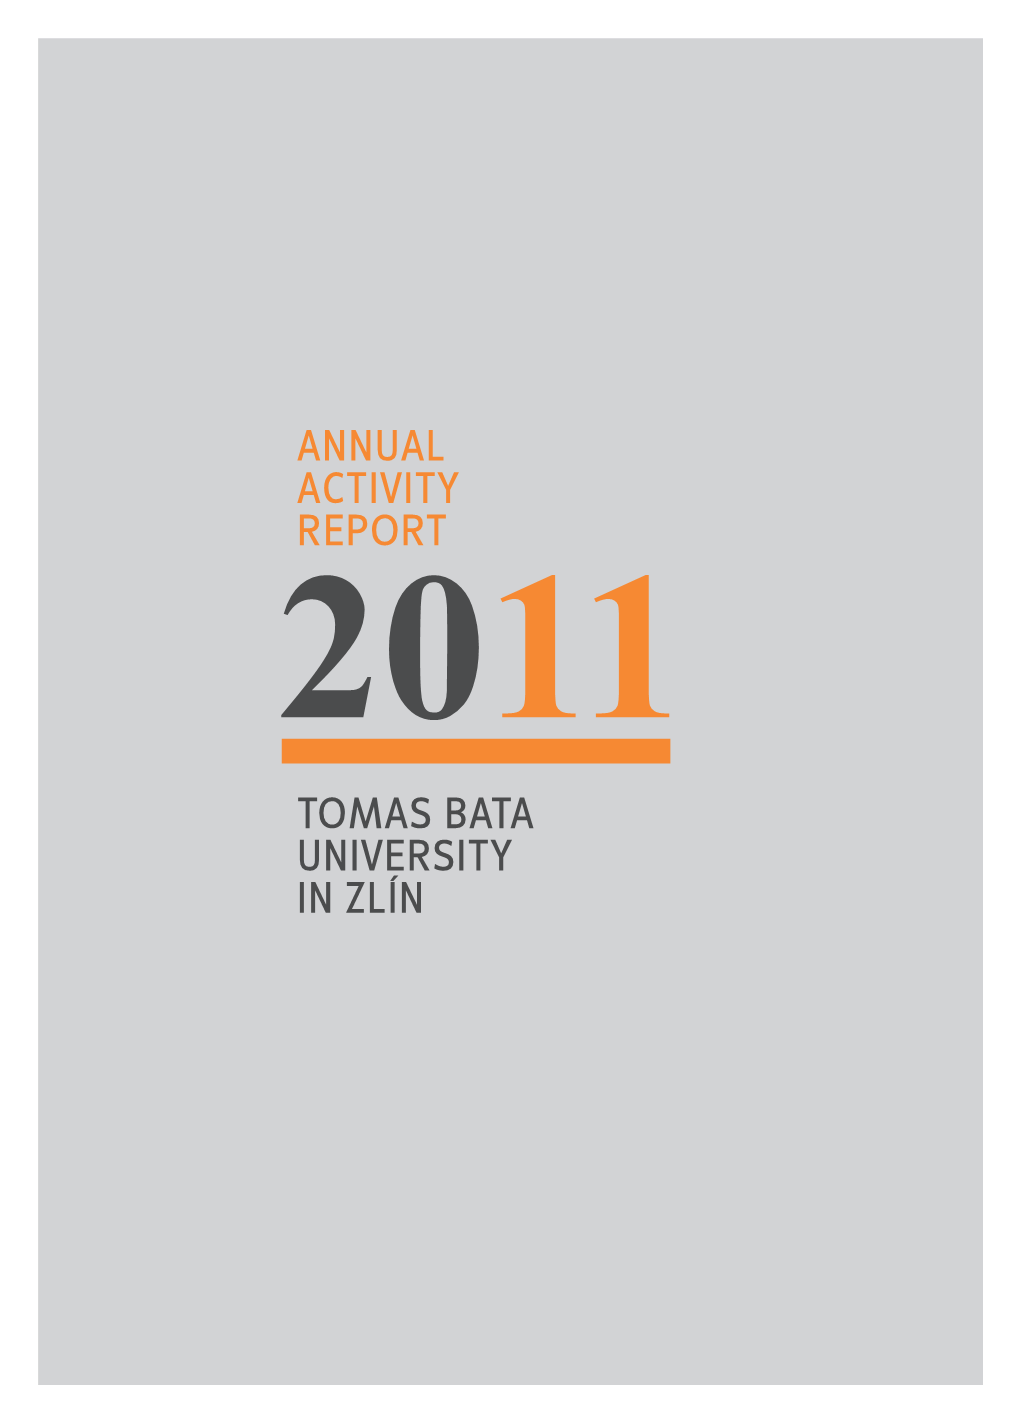 Annual Activity Report Tomas Bata University in Zlín